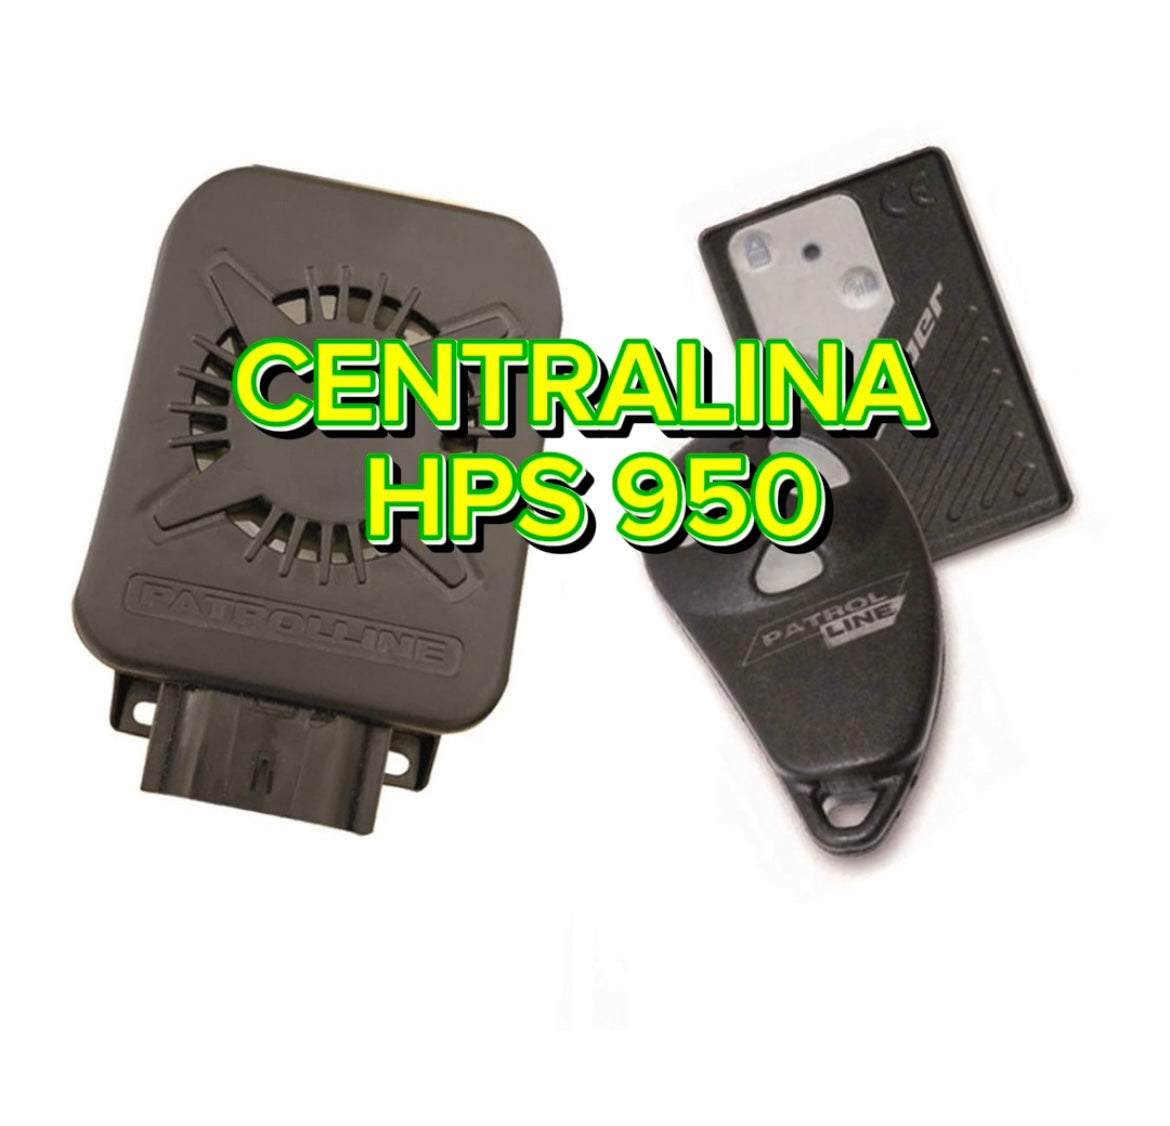 Centralina HPS 950 Patrolline - Antifurto Moto Con Antirapina – Allarme moto